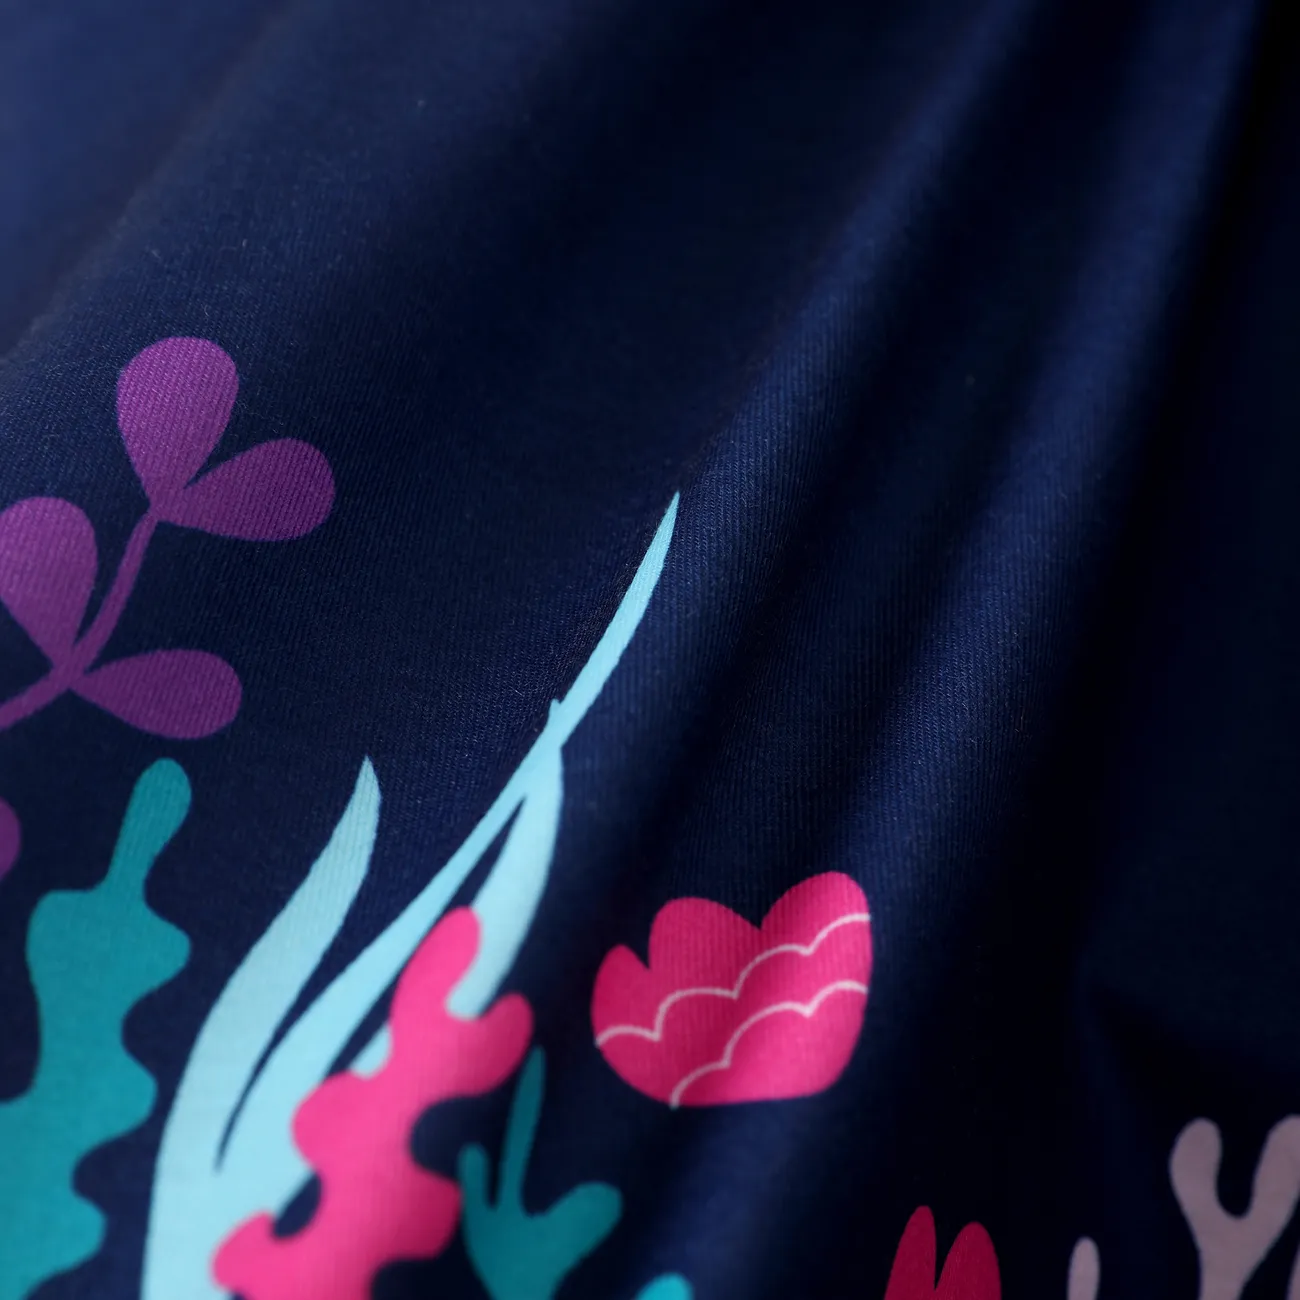 Peppa Pig 1pc Toddler Girls Character Print Ocean-Themed/Cactus Sleeveless Dress Dark Blue big image 1